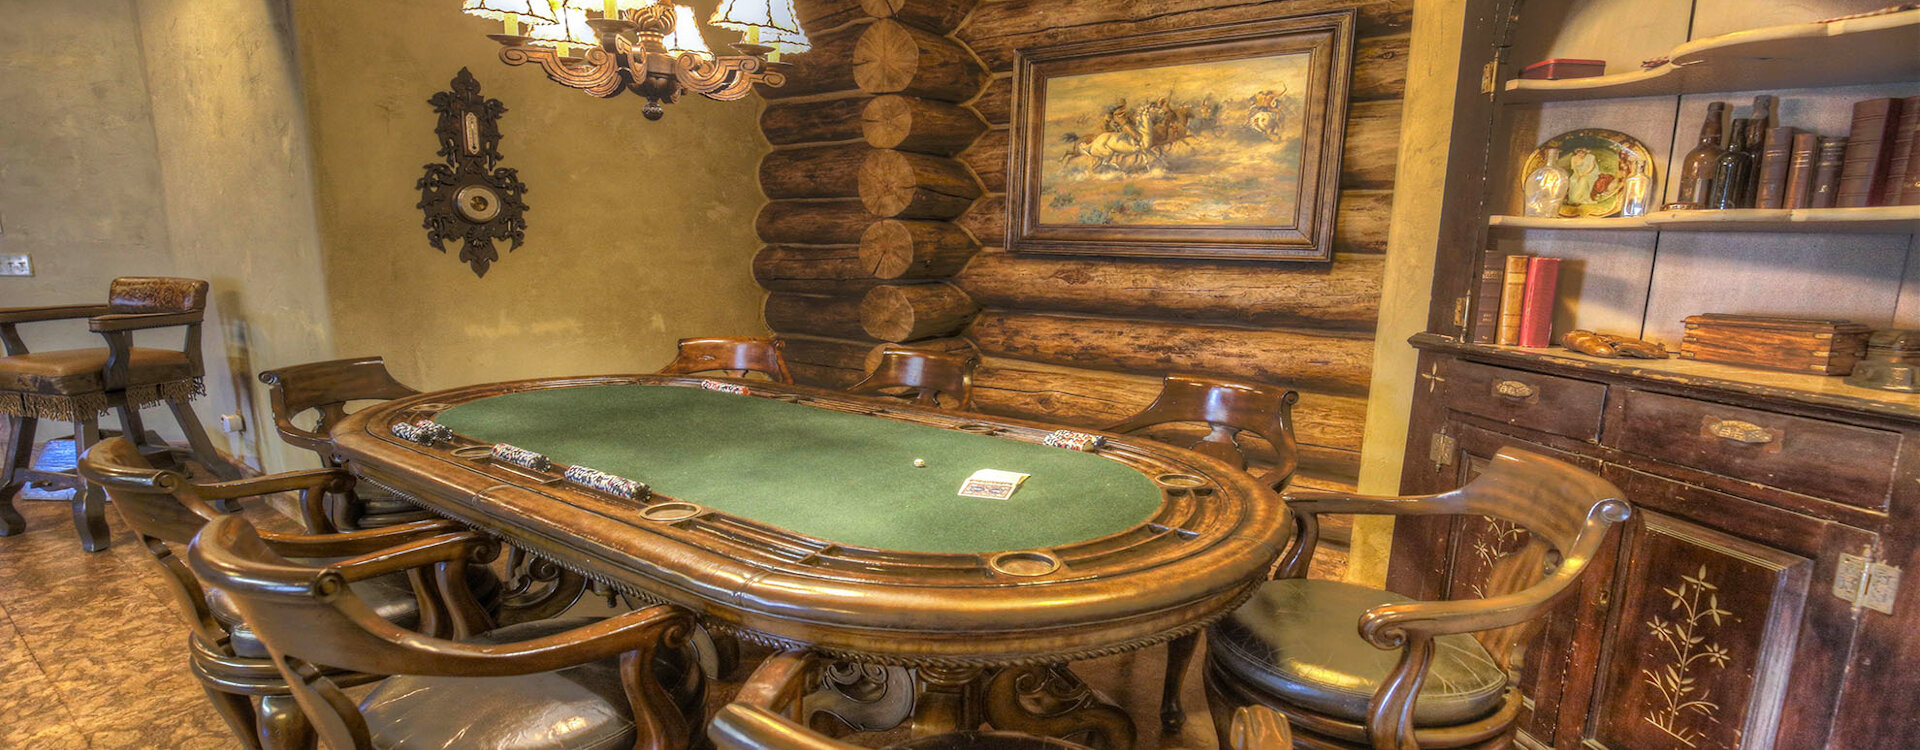 35.5-telluride-castlewood-poker-table